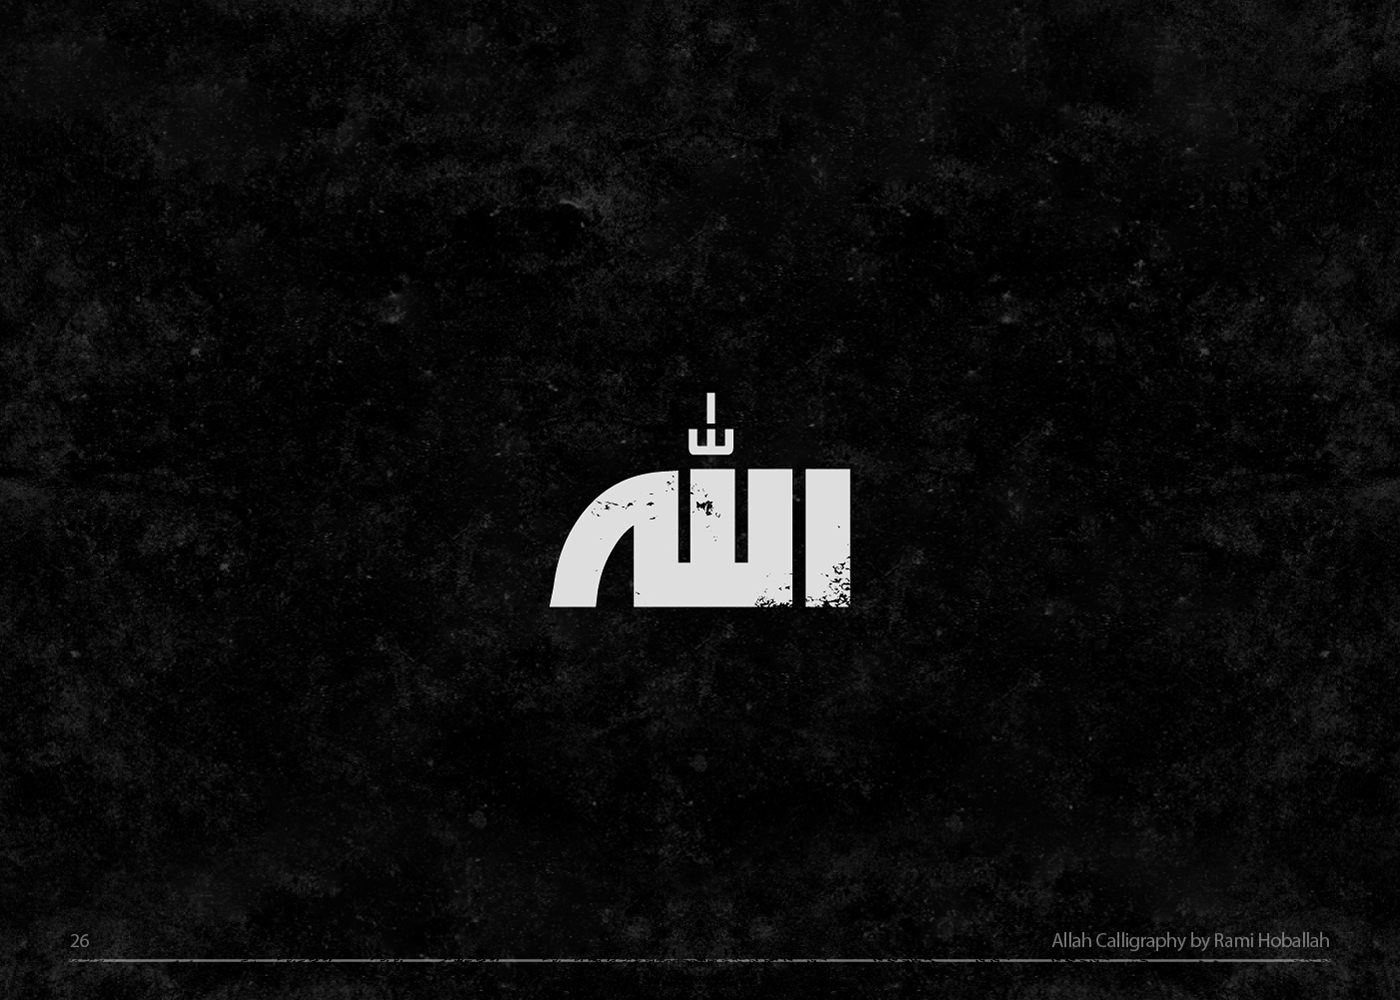 allah calligraphic arabic God islamic arabian lebanon Kuwait Arab black White name egypt Saudi muslim